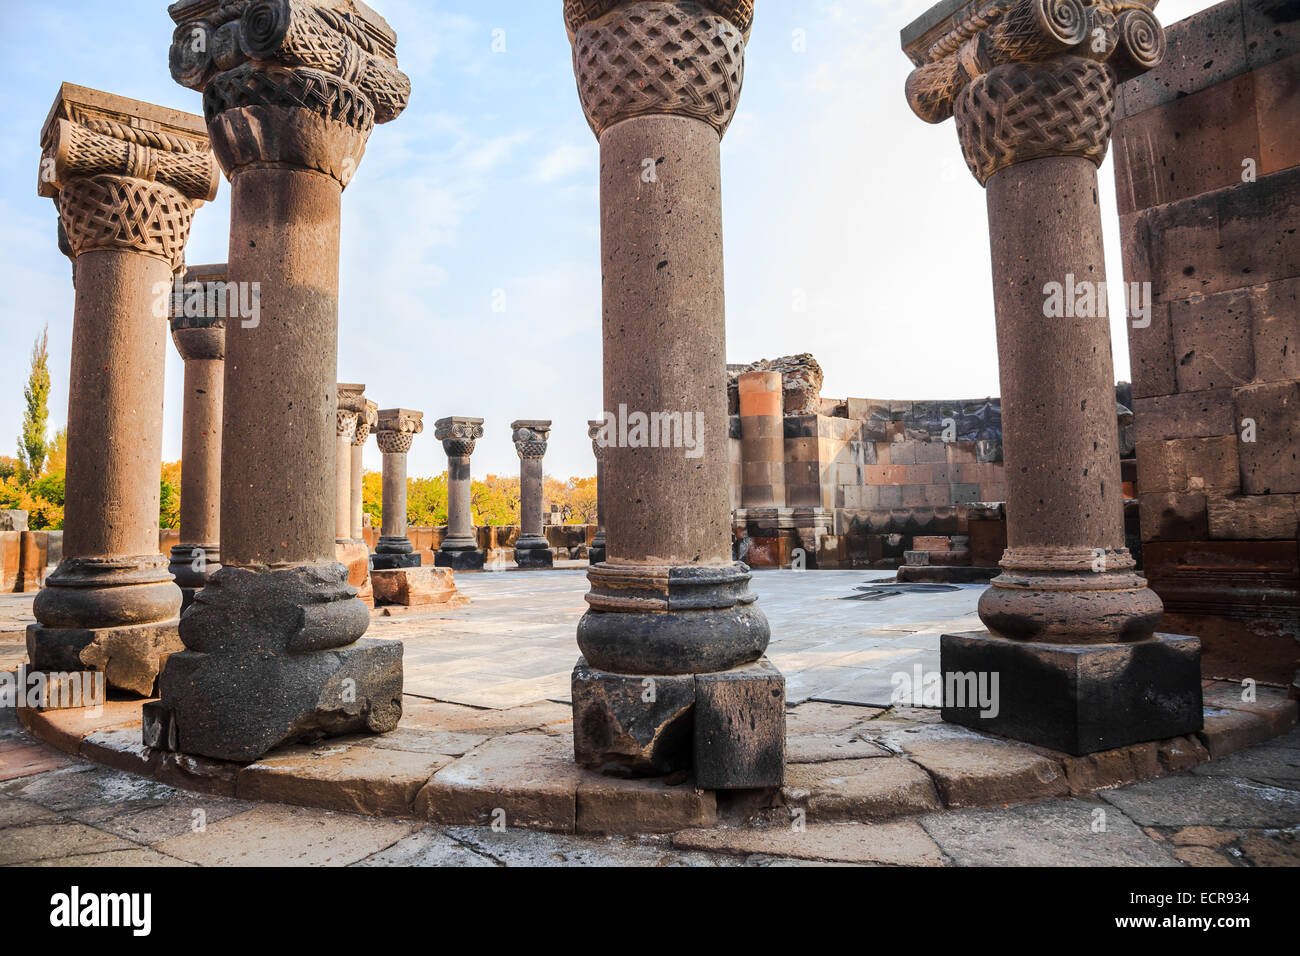 The Columns at Ruins Zvartnots Cathedral in Echmiadzin, Armenia Stock Photo